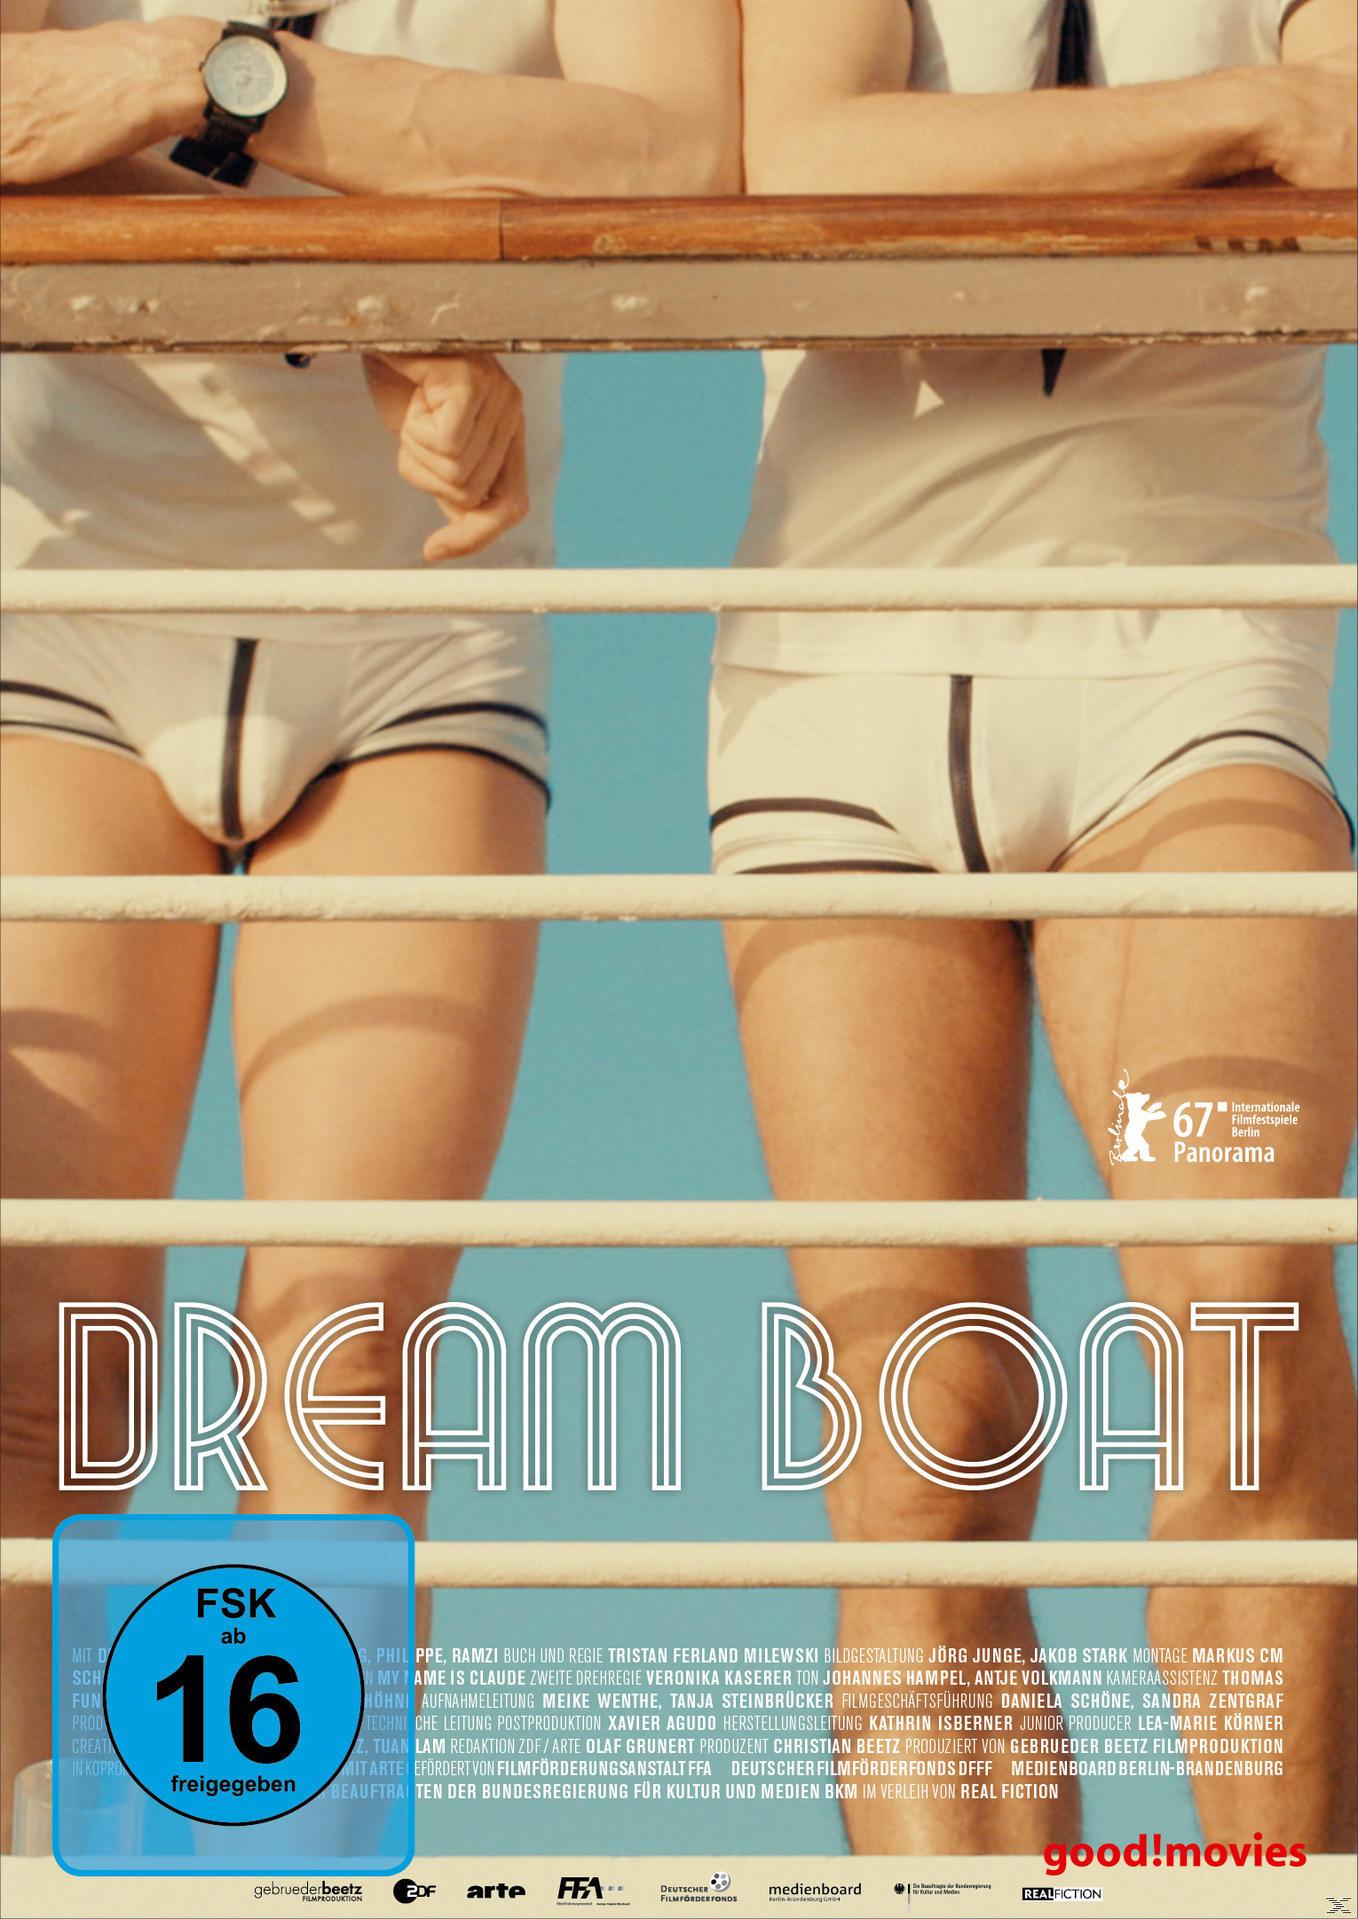 + Dream DVD Boat CD